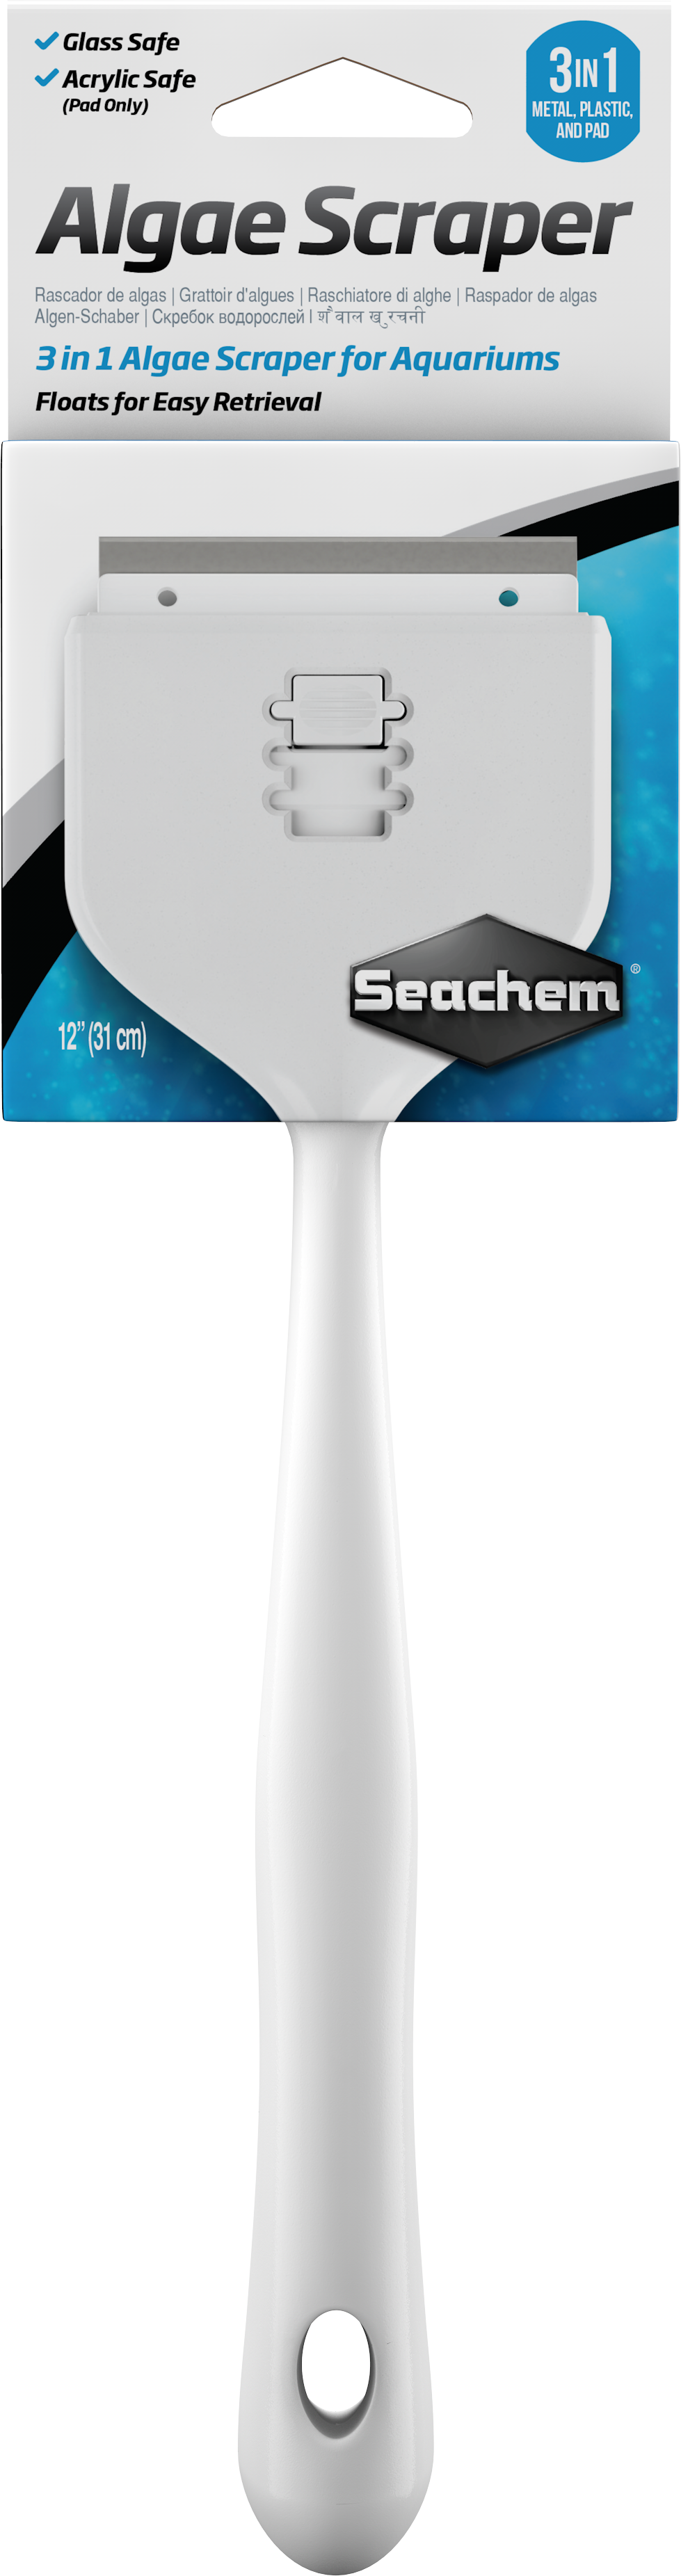 seachem-algae-scraper-12-inch